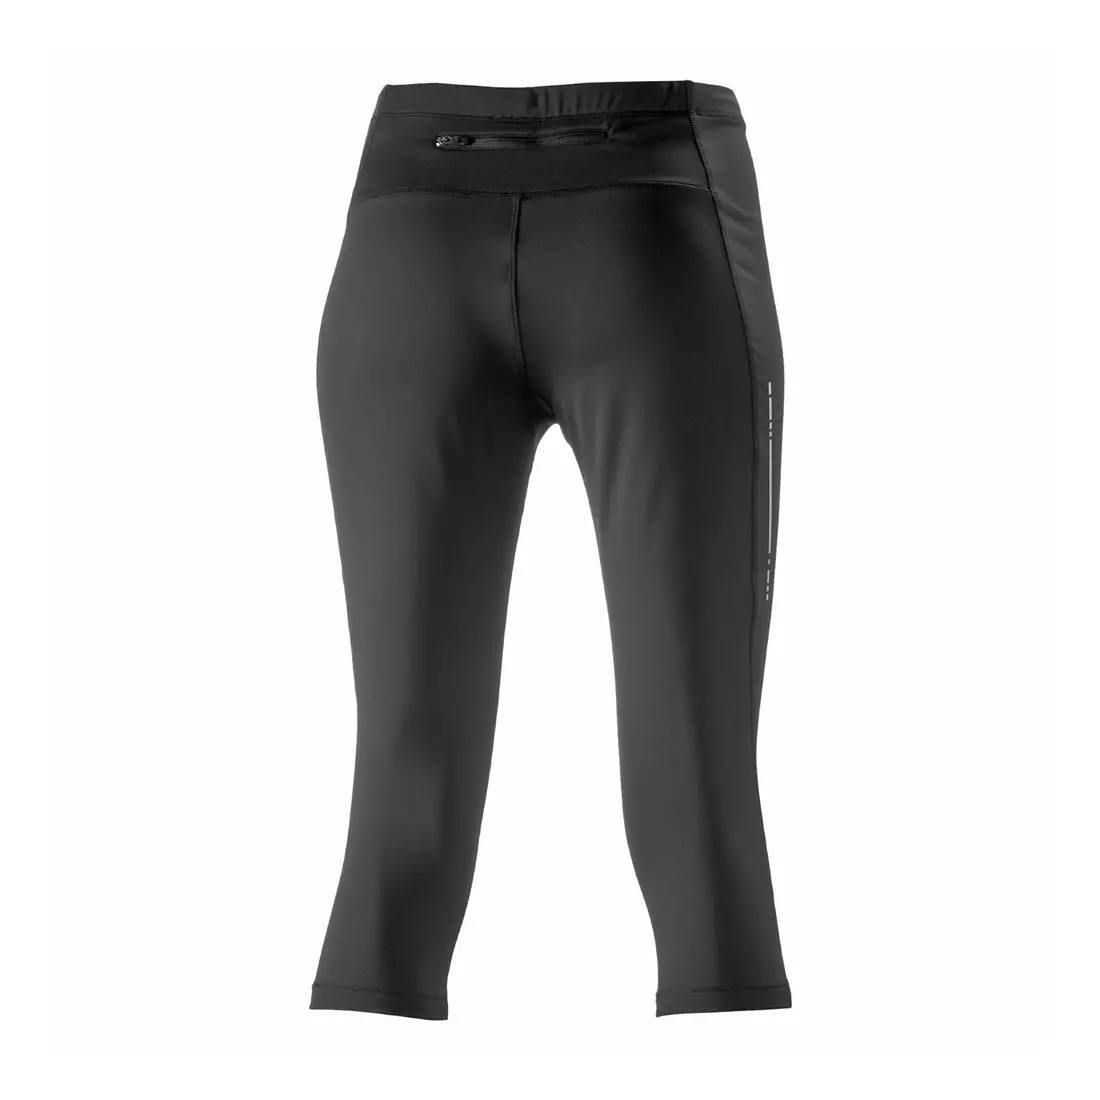 ASICS 110430-0904 - women's 3/4 KNEE TIGHT shorts, color: black